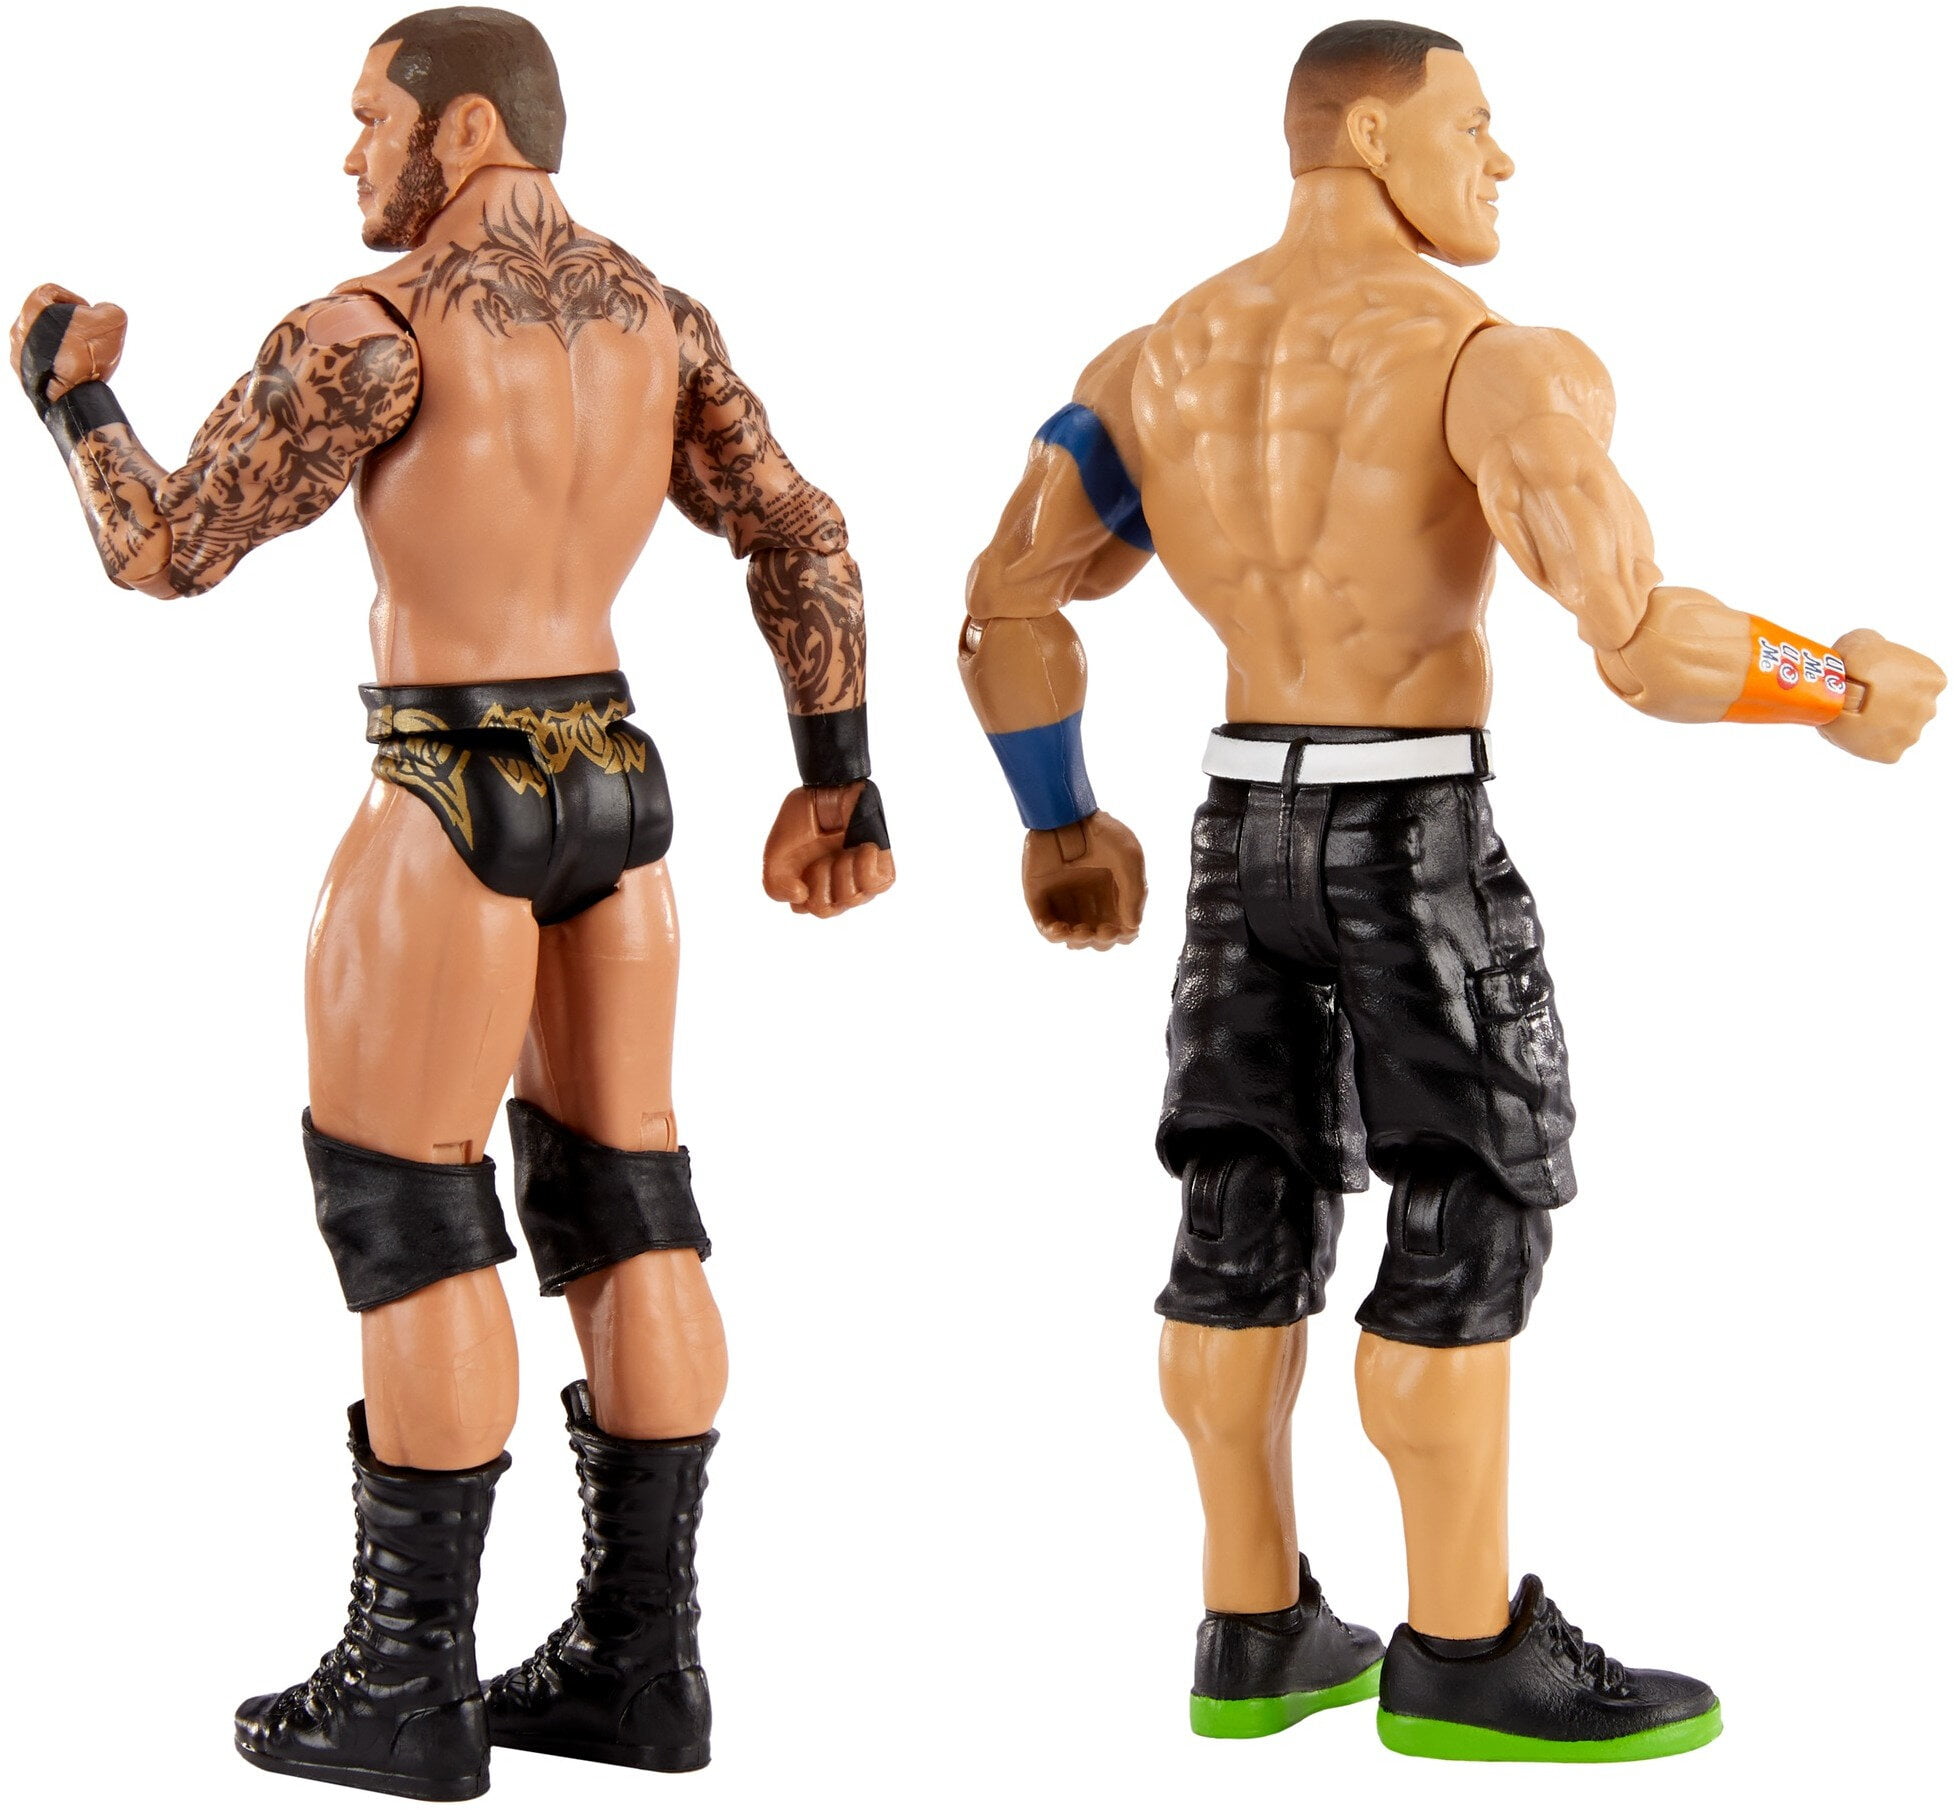  ​WWE John Cena vs Randy Orton Championship Showdown 2